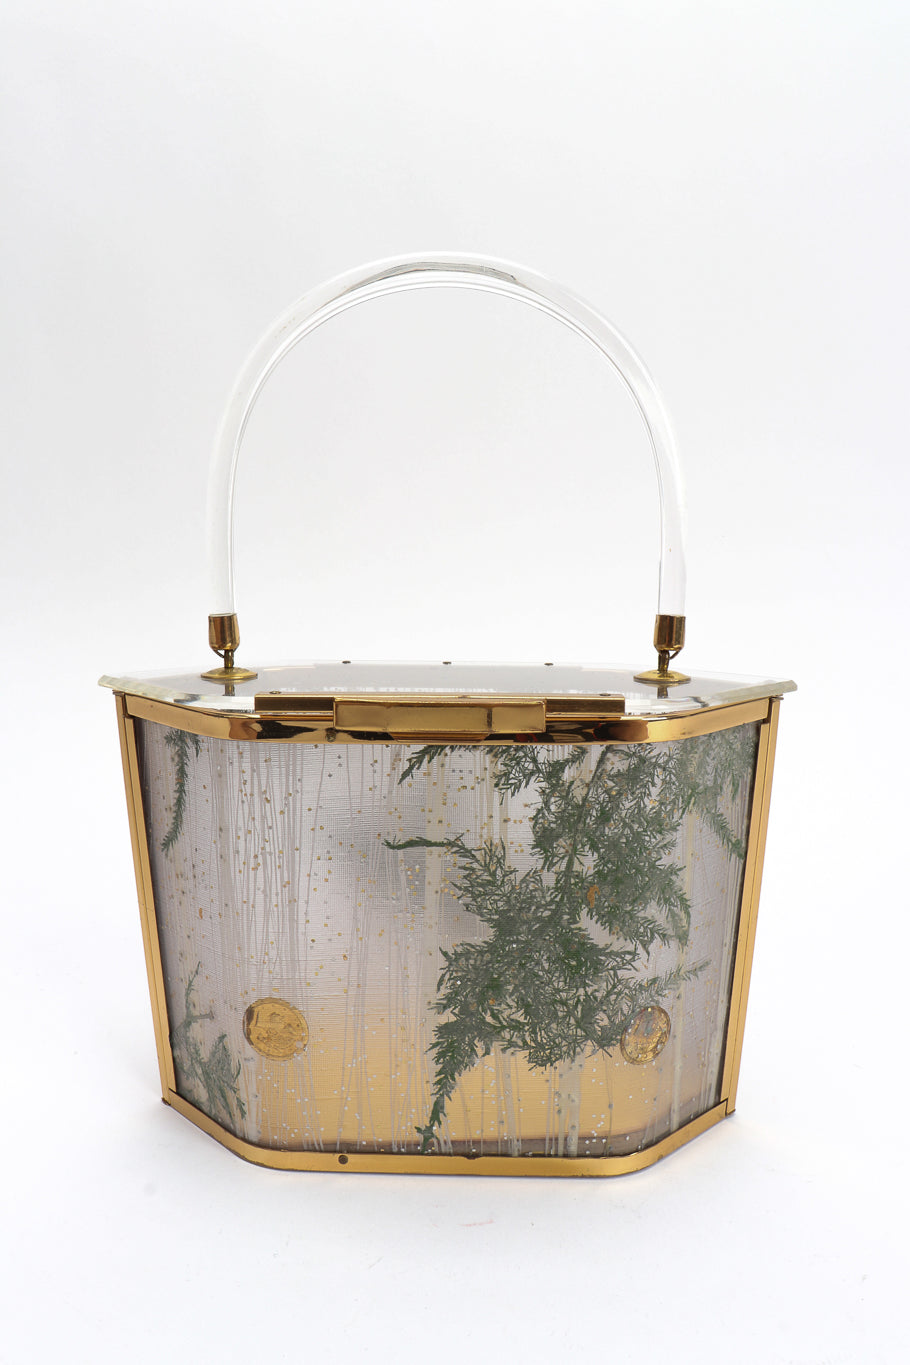 Vintage Majestic Pressed Foliage Lucite Box Bag front view on white backdrop @Recessla